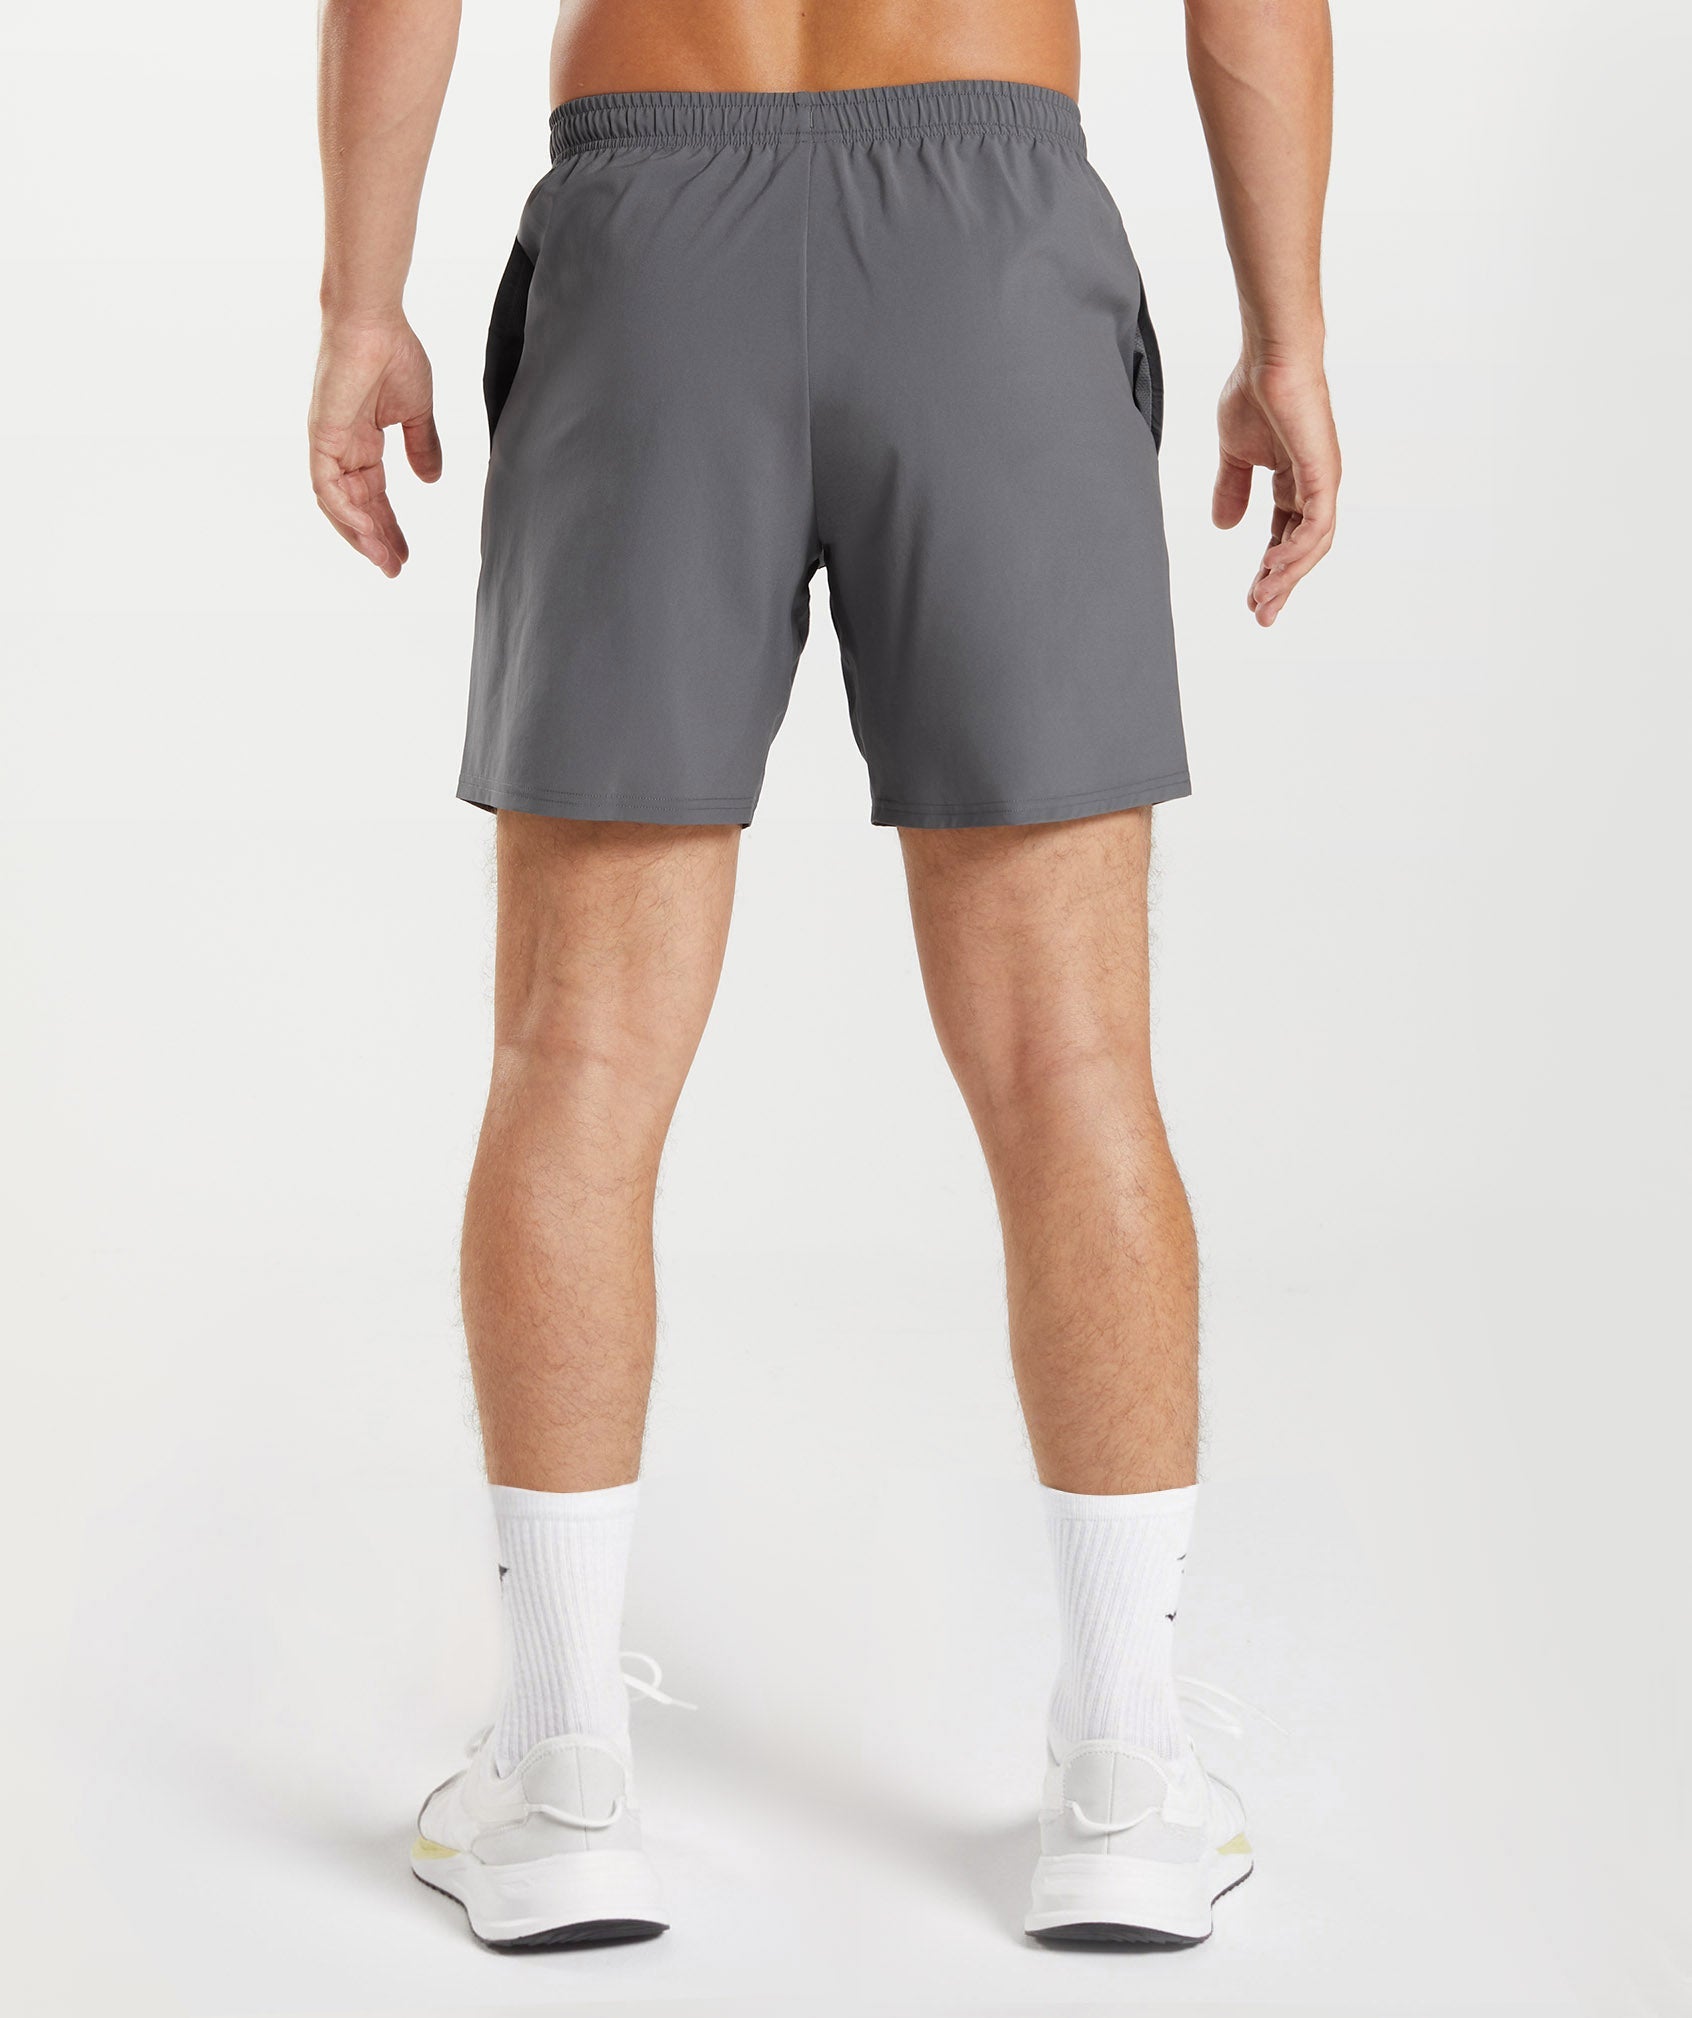 Gymshark Arrival Shorts - Grey Print